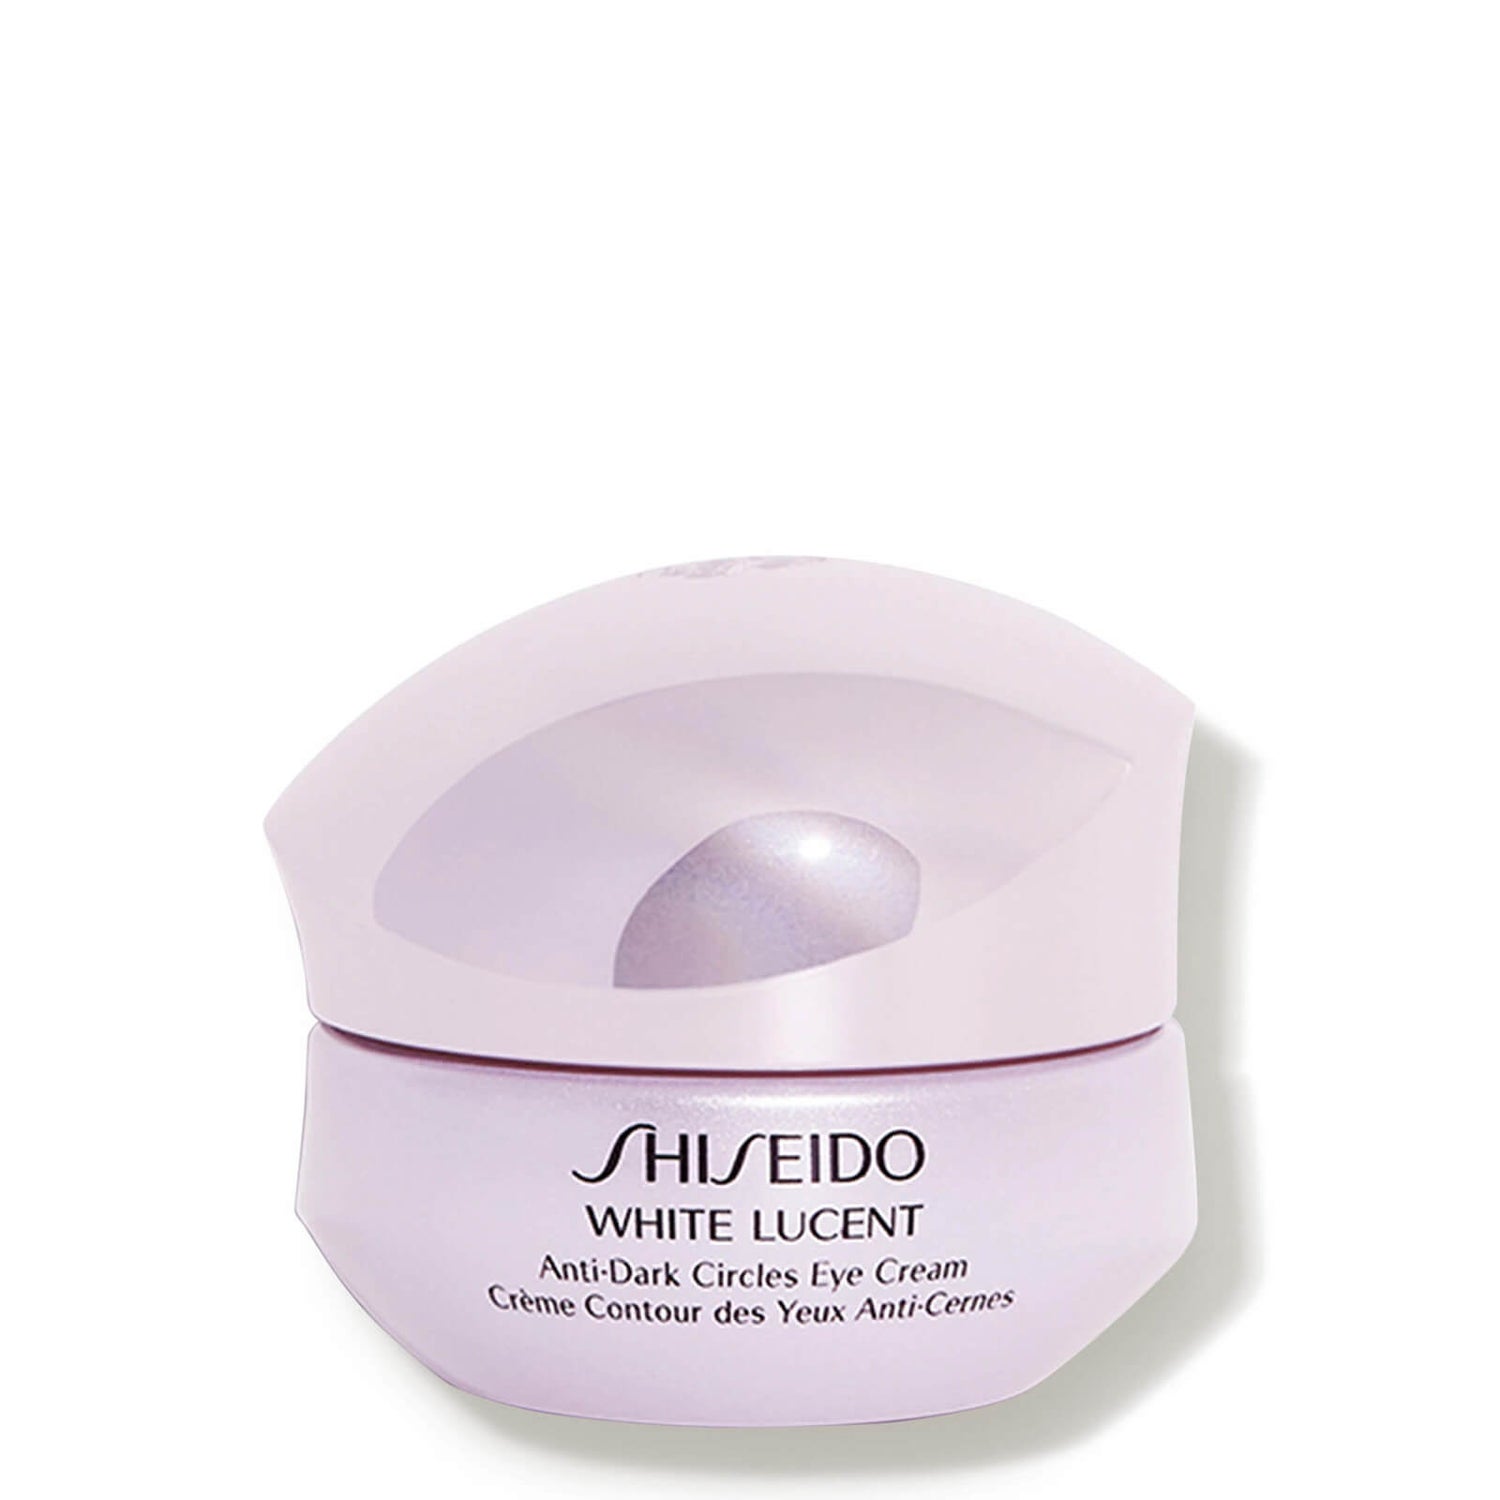 Shiseido White Lucent Anti-Dark Circles Eye Cream (15 ml.)